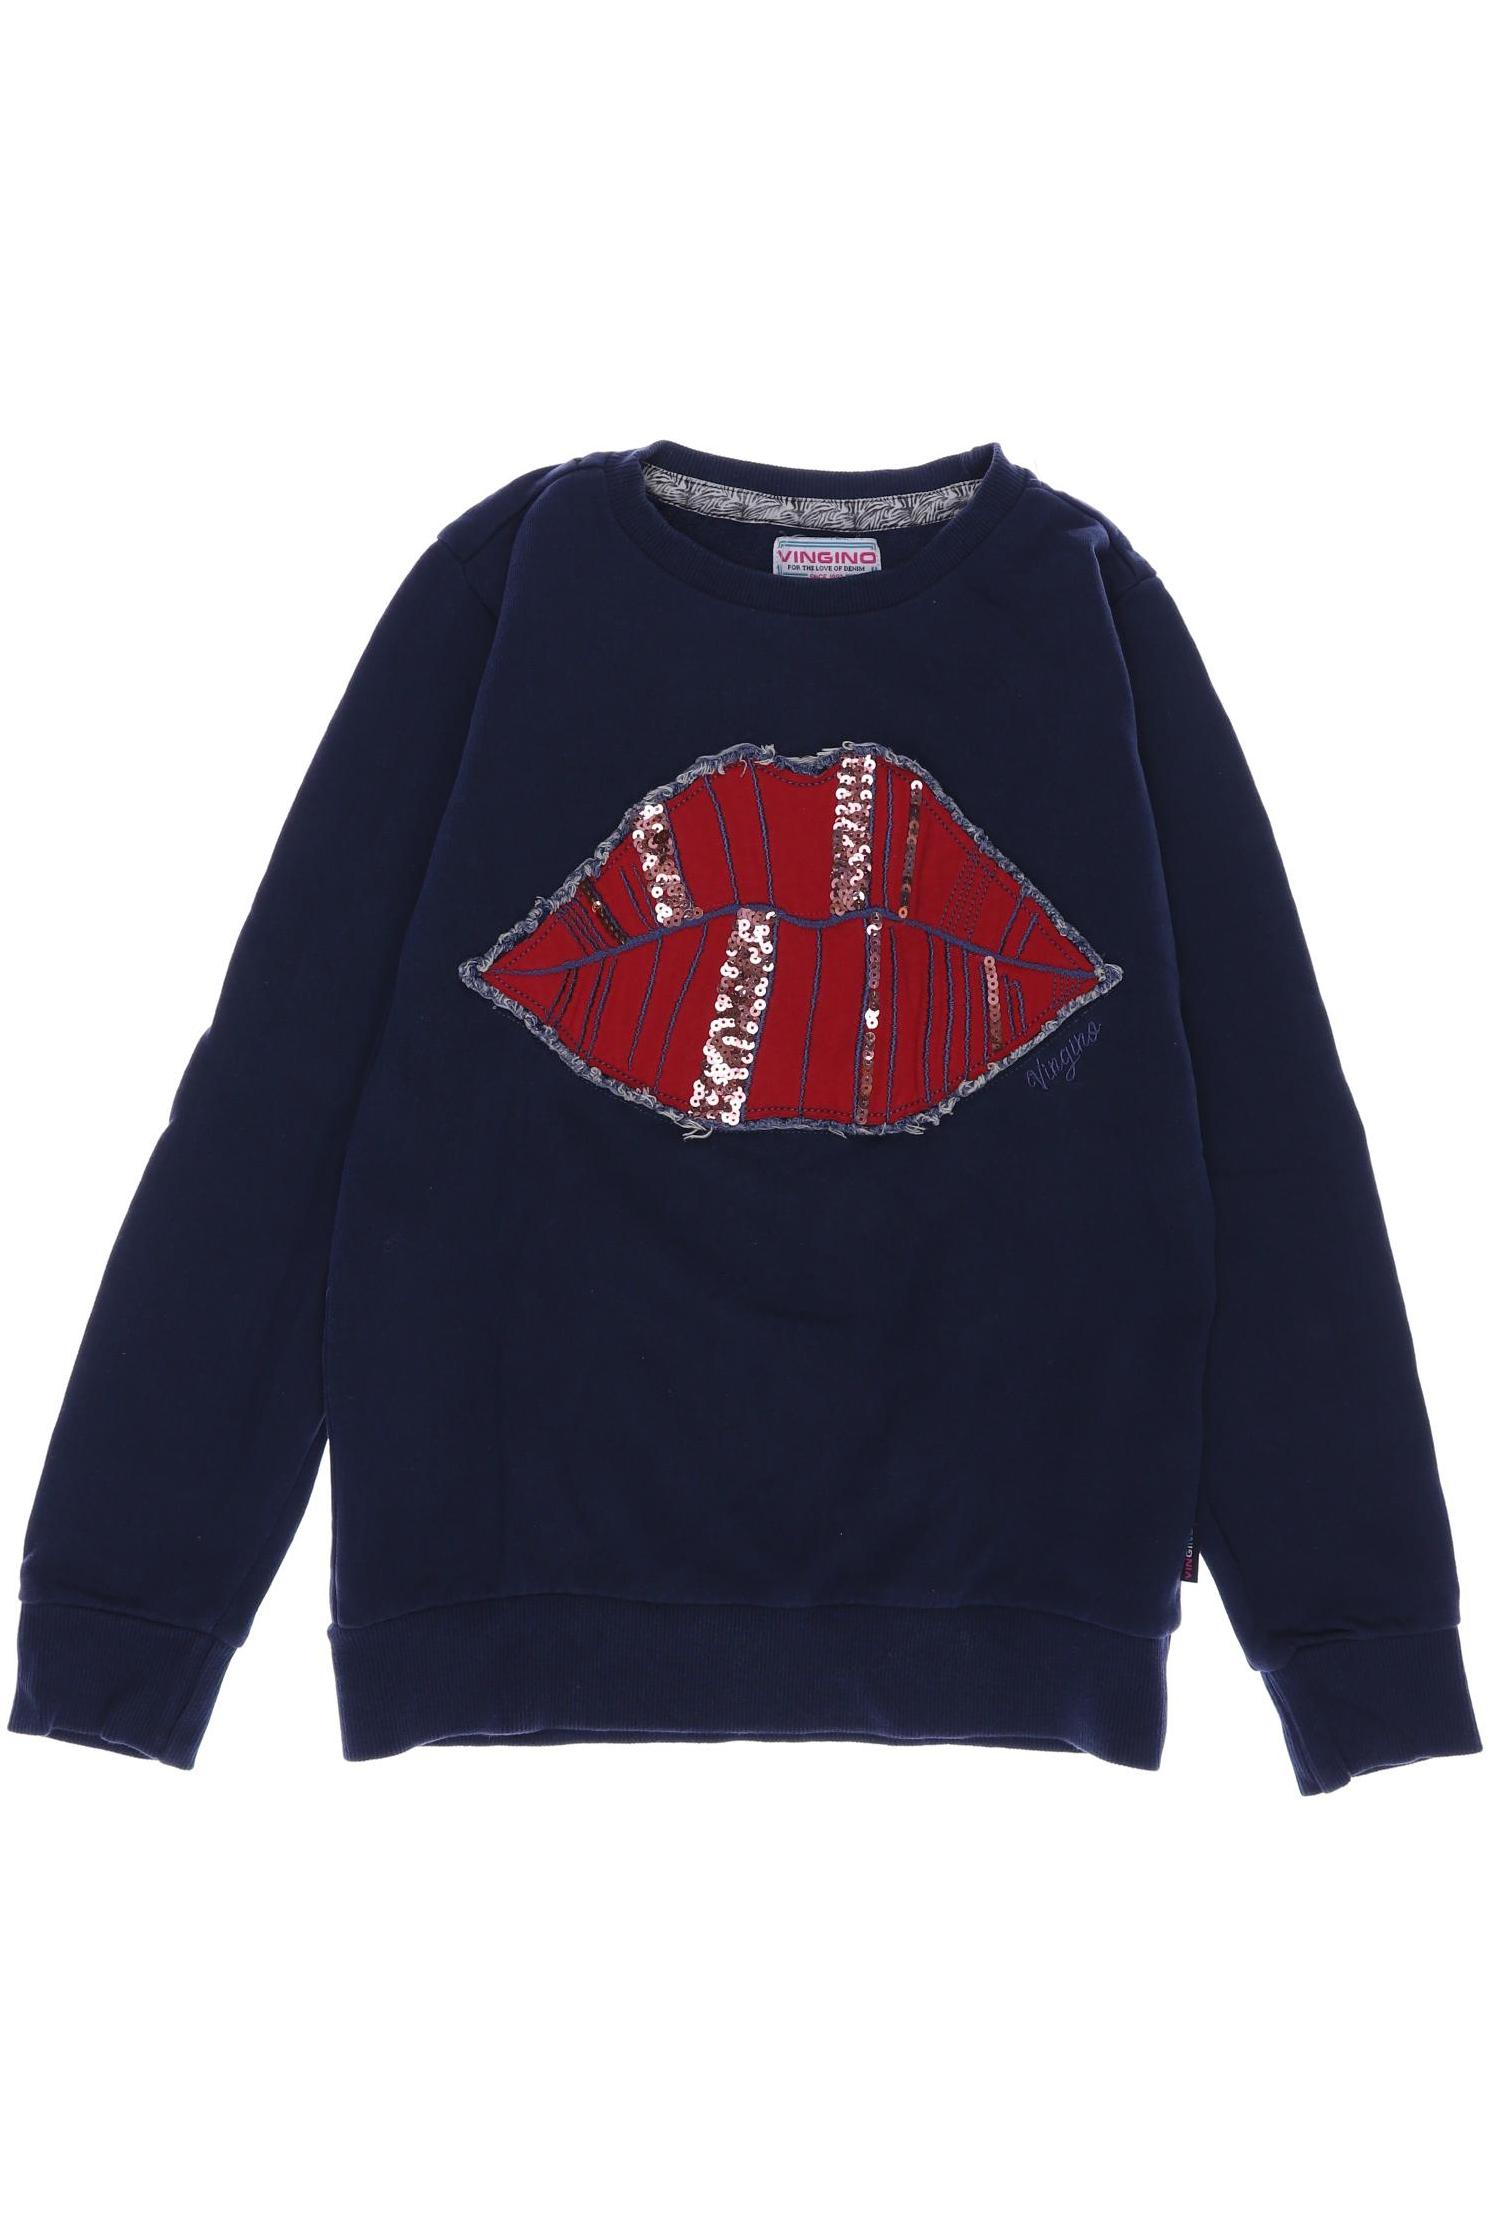 Vingino Damen Hoodies & Sweater, marineblau, Gr. 152 von VINGINO